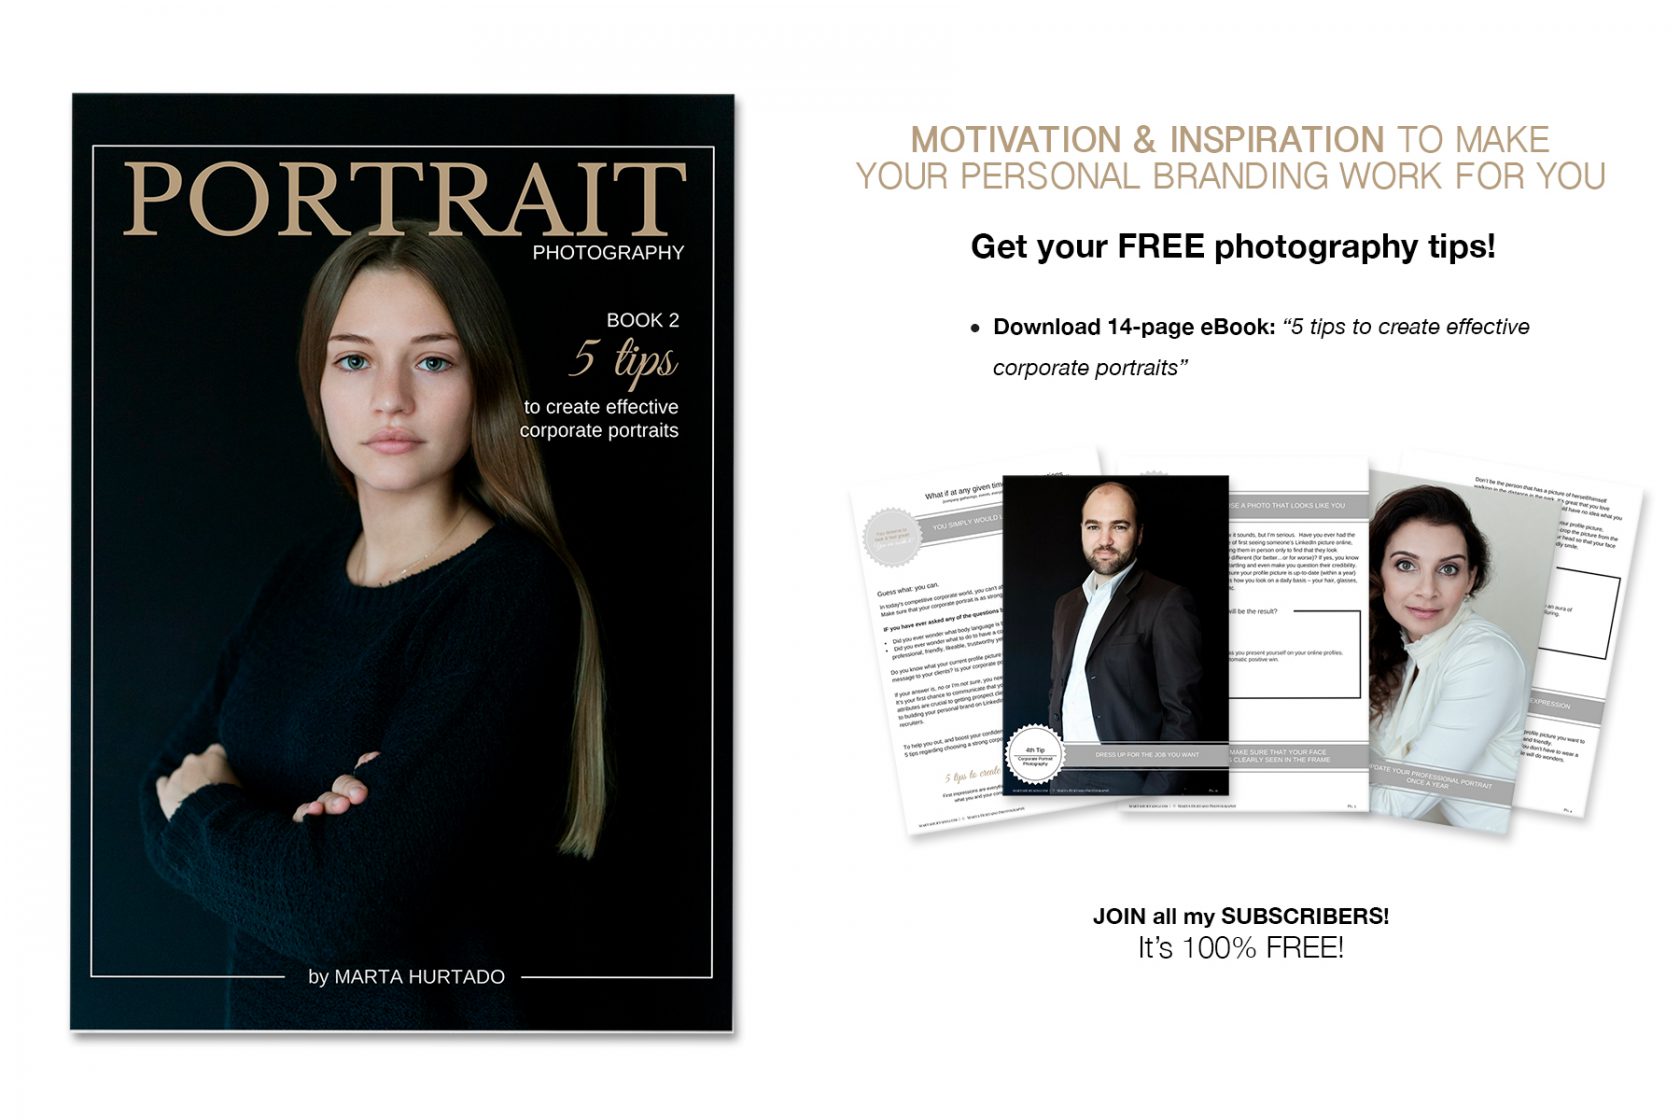 Personal-Branding-5-tips-to-create-most-effective-corporate-portraits-freebie-eBook-Marta-Hurtado_Portrait-Photography